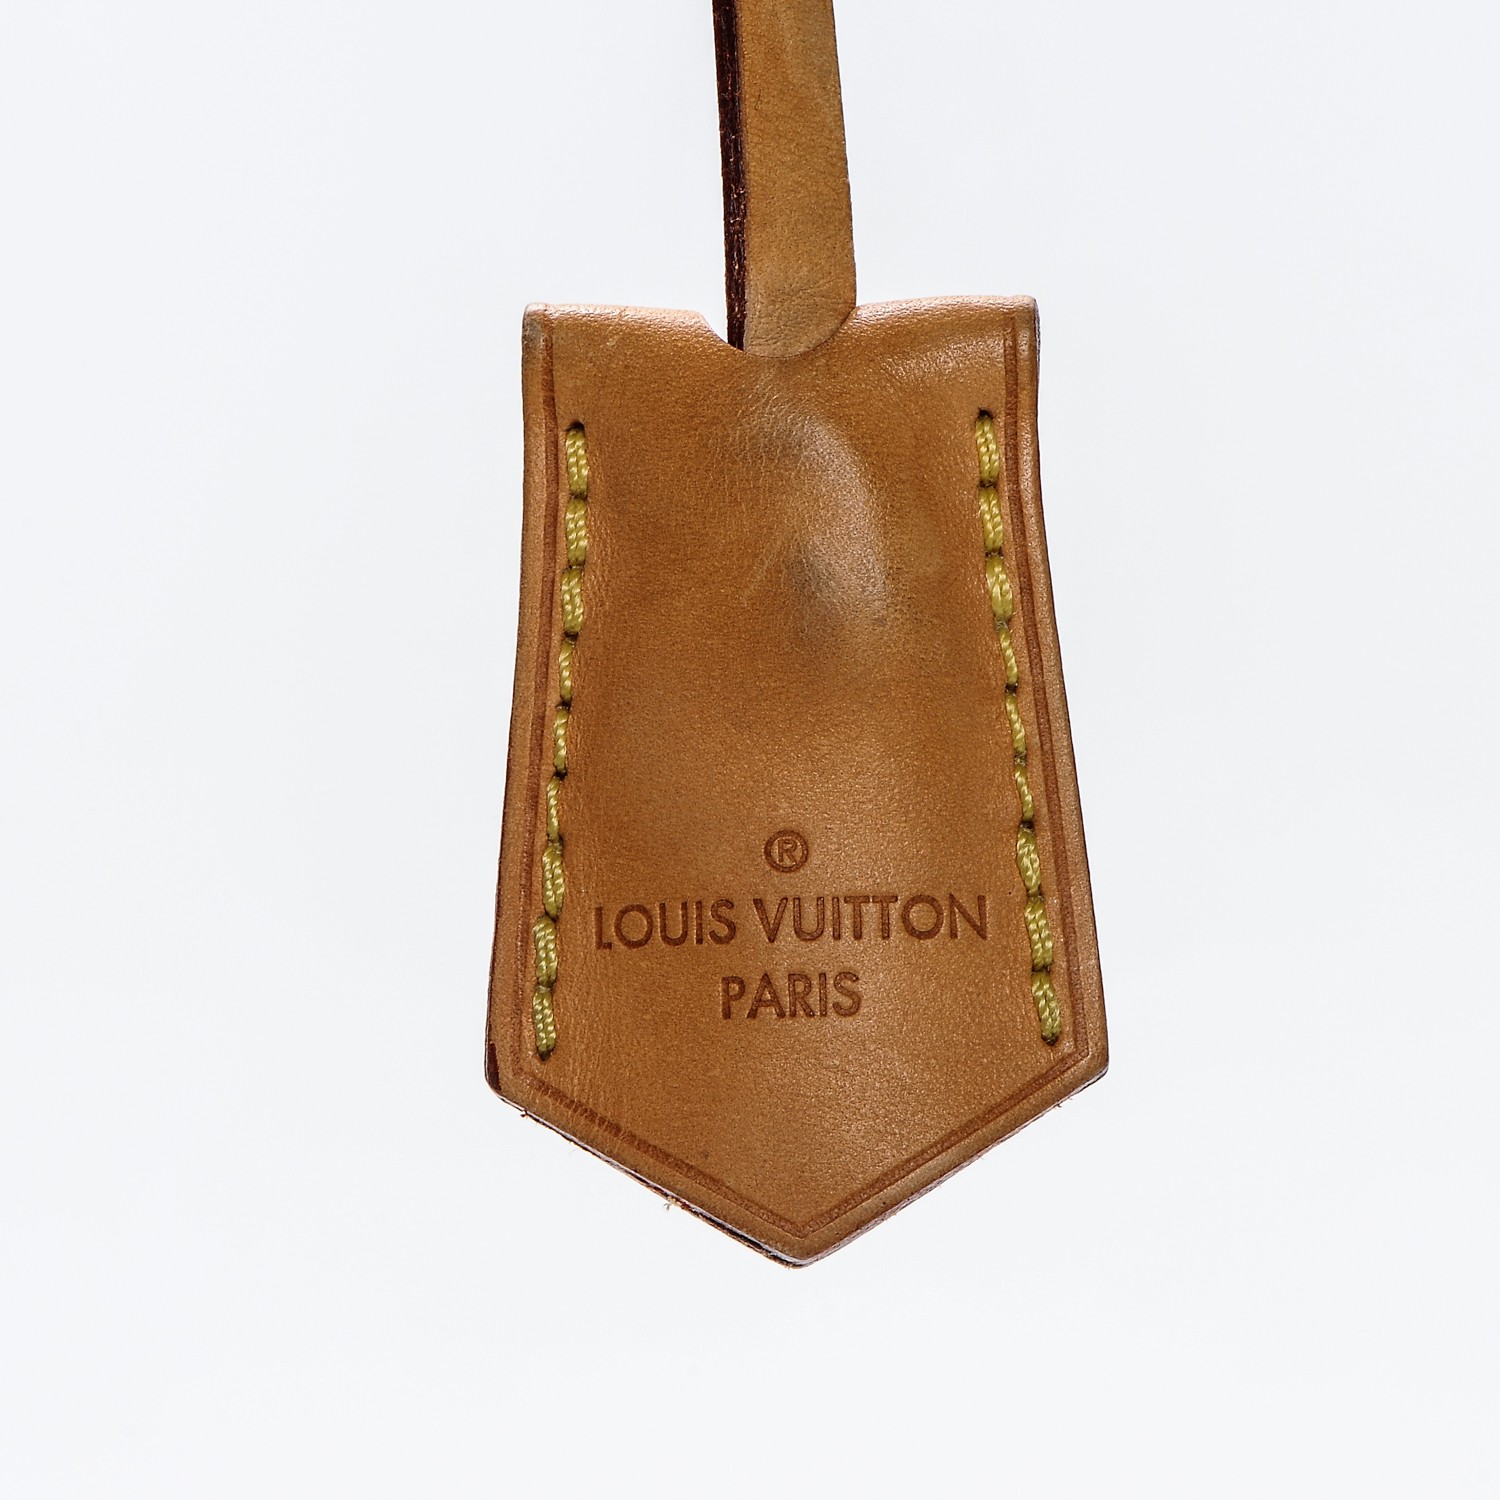 Louis Vuitton LV Cup Long Zippy Organizer Wallet Navy Blue Leather Gaston V